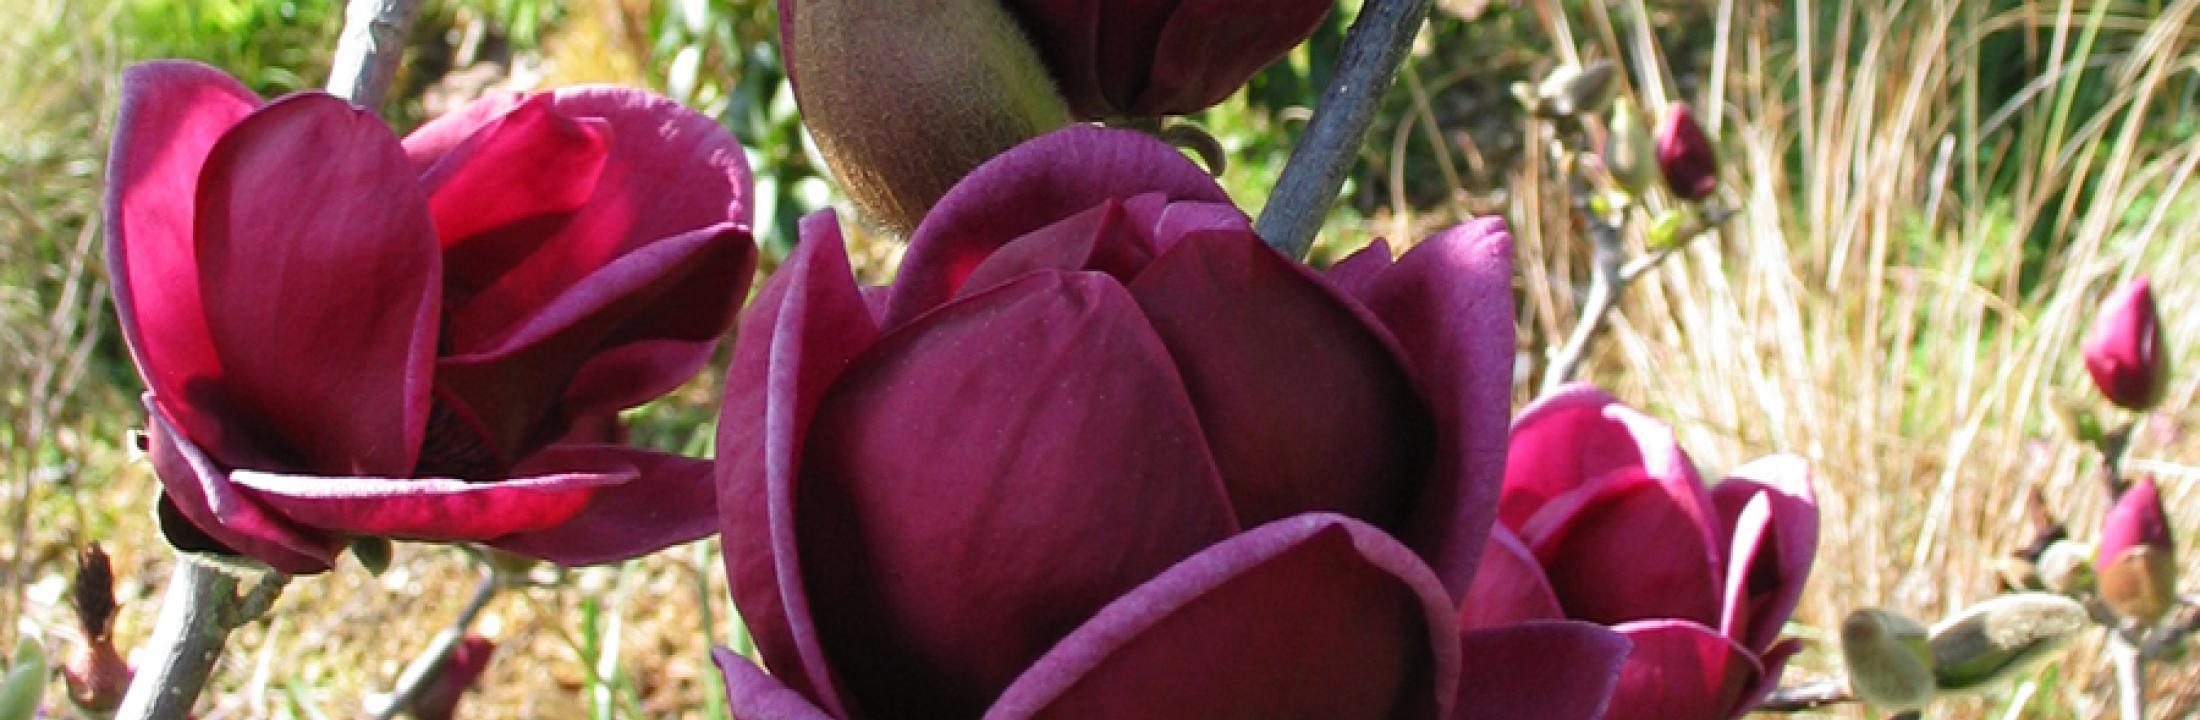 Magnolia Genie by Ron Le Poole - Holland